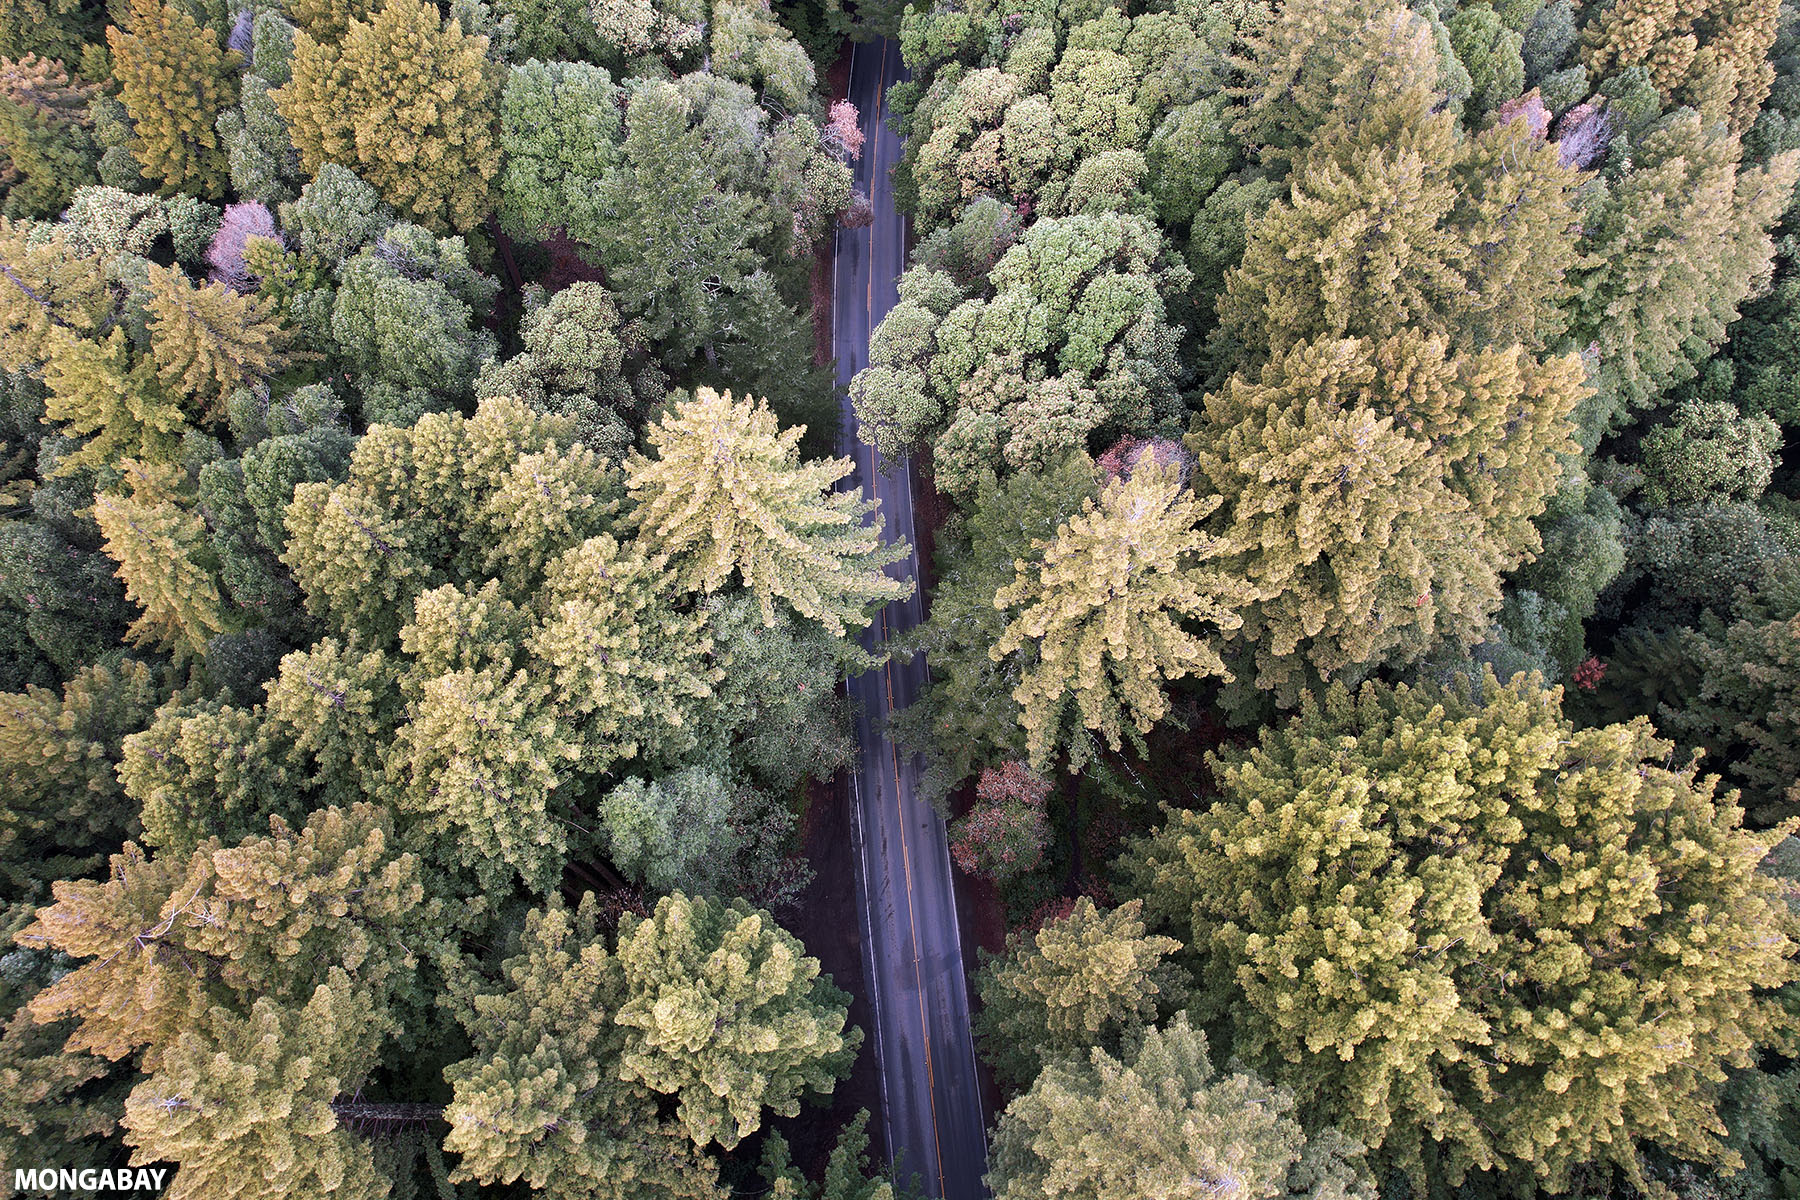 Road through redwoods in California. Photo by Rhett A. Butler.